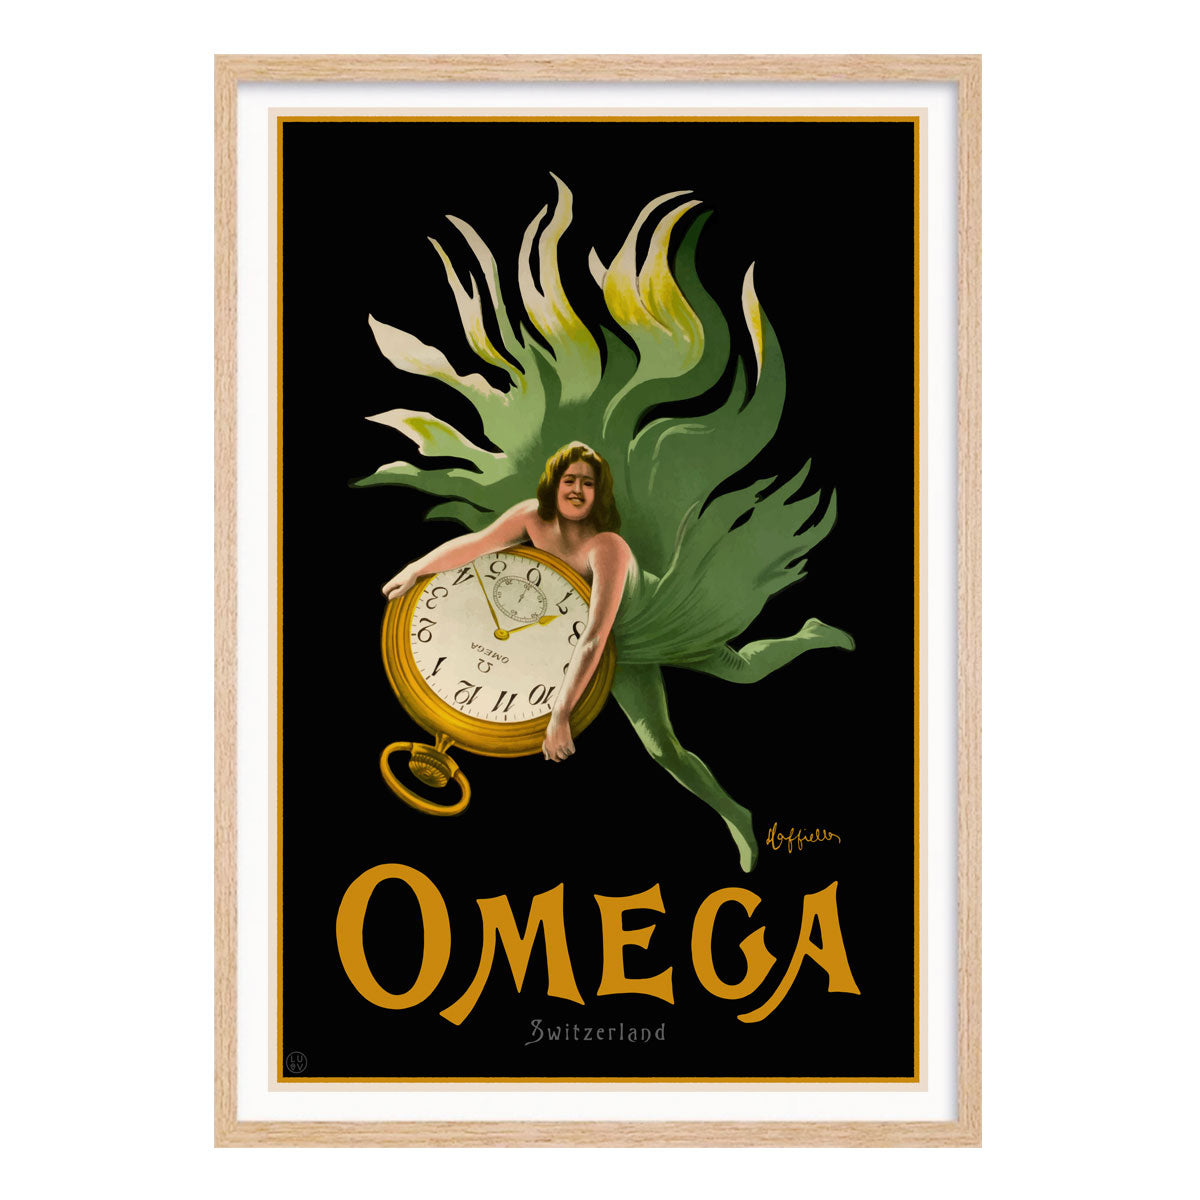 Omega Switzerland retro vintage advertising poster in oak frame - Places We Luv